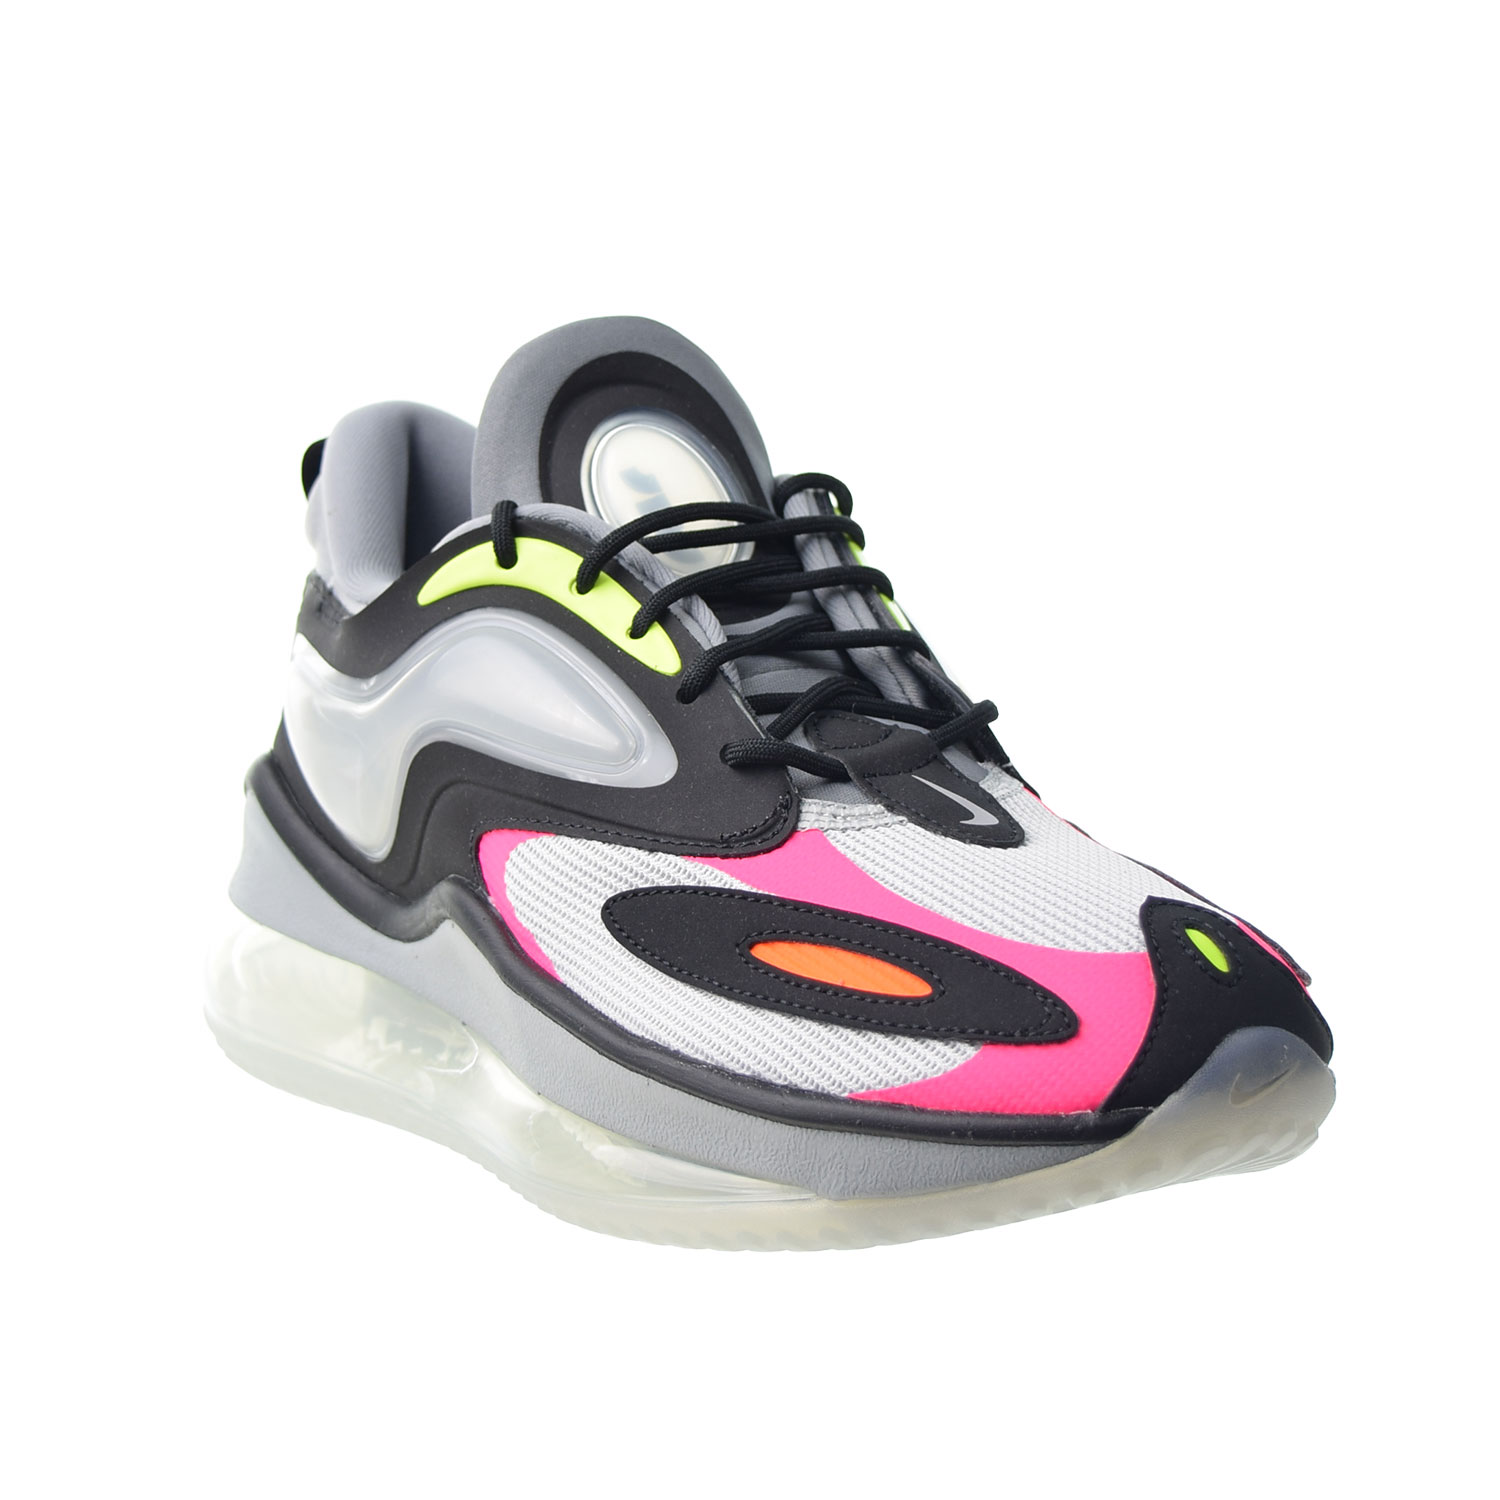 Nike Air Max Zephyr Men's Shoes Photon Dust-Black CT1682-002 | eBay